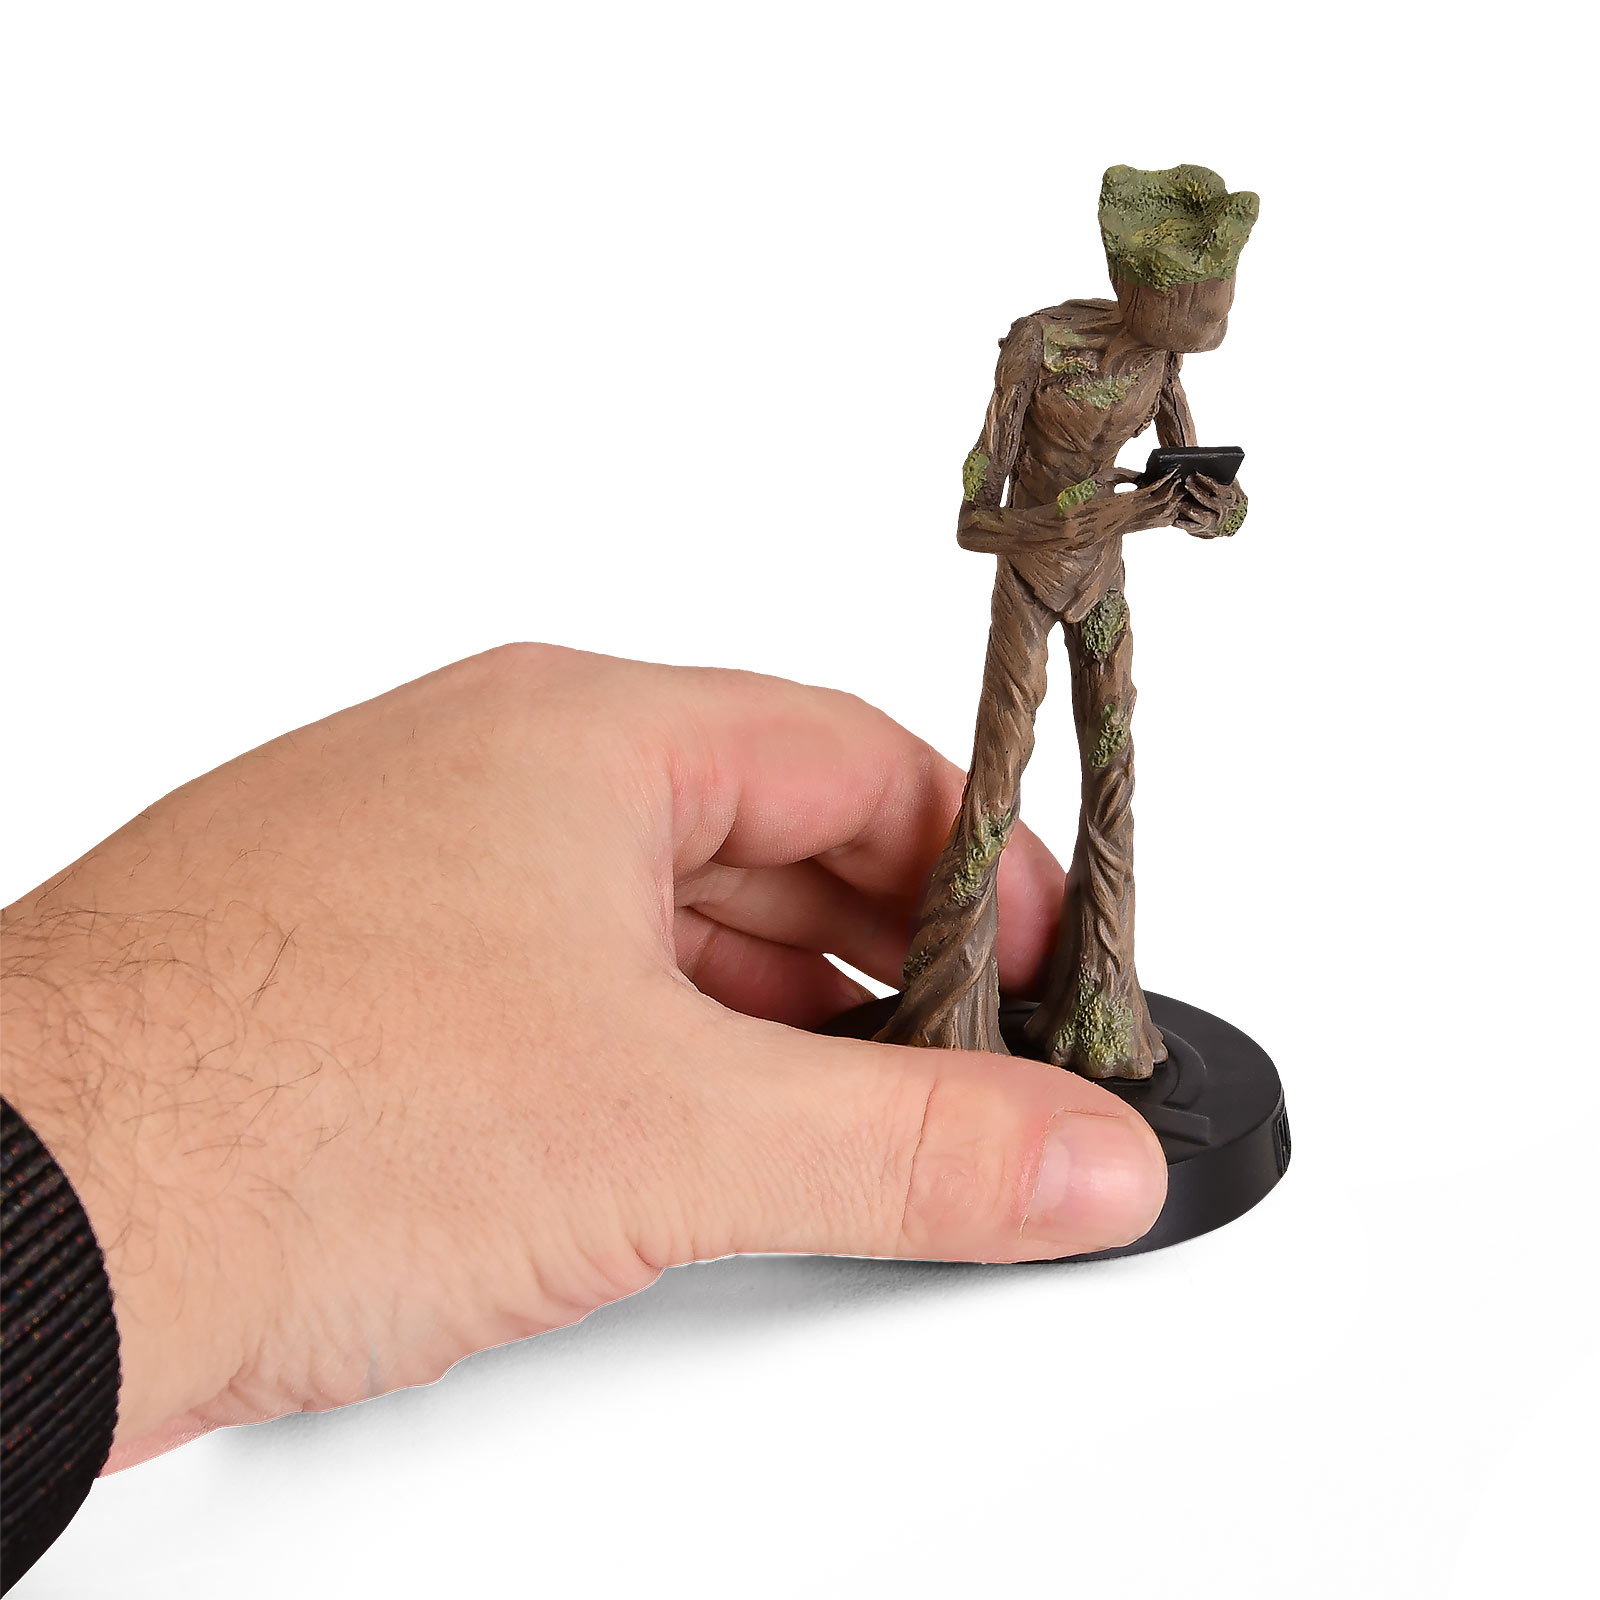 Les Gardiens de la Galaxie - Groot Hero Collector Figurine 12 cm